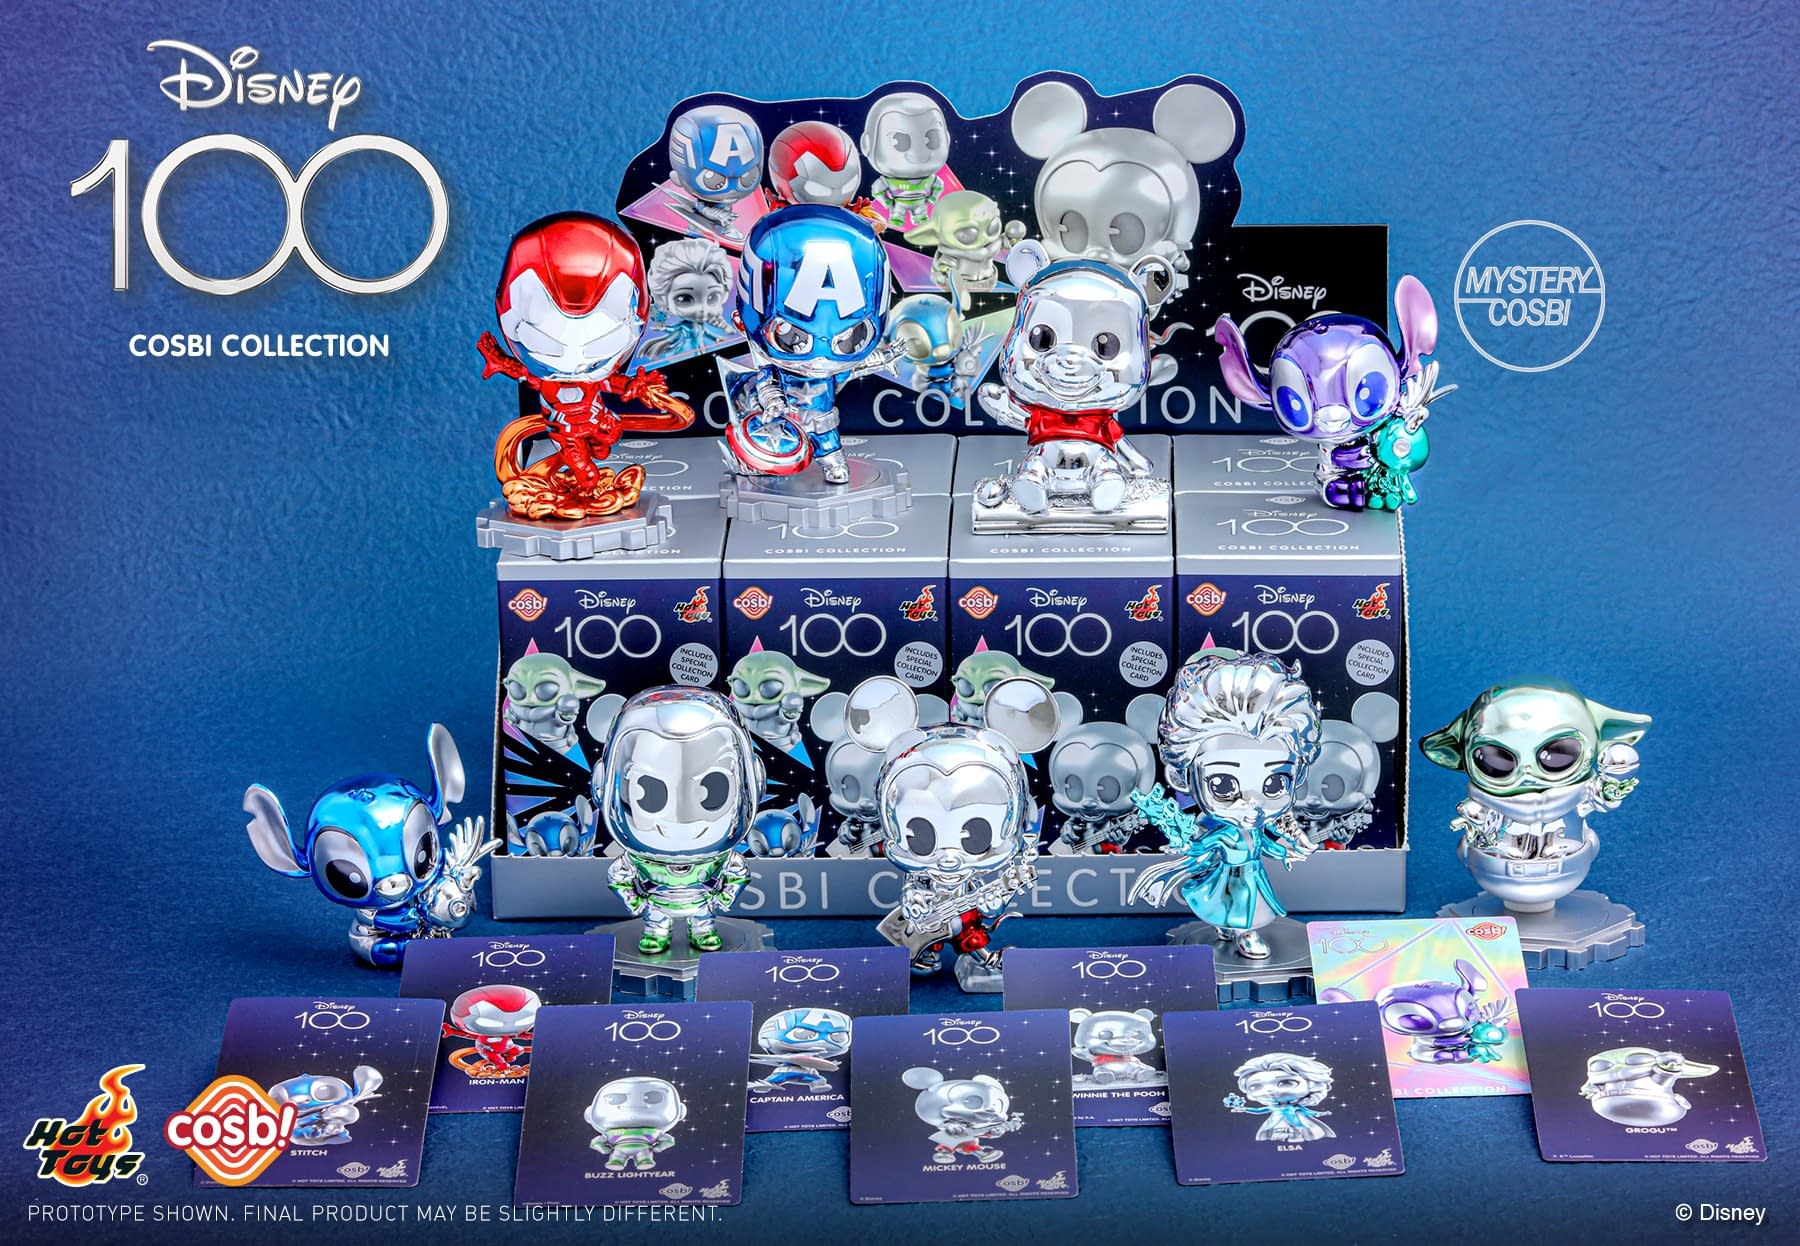 Hot Toys Unveils New Disney 100 Platinum Color Cosbi Collection1